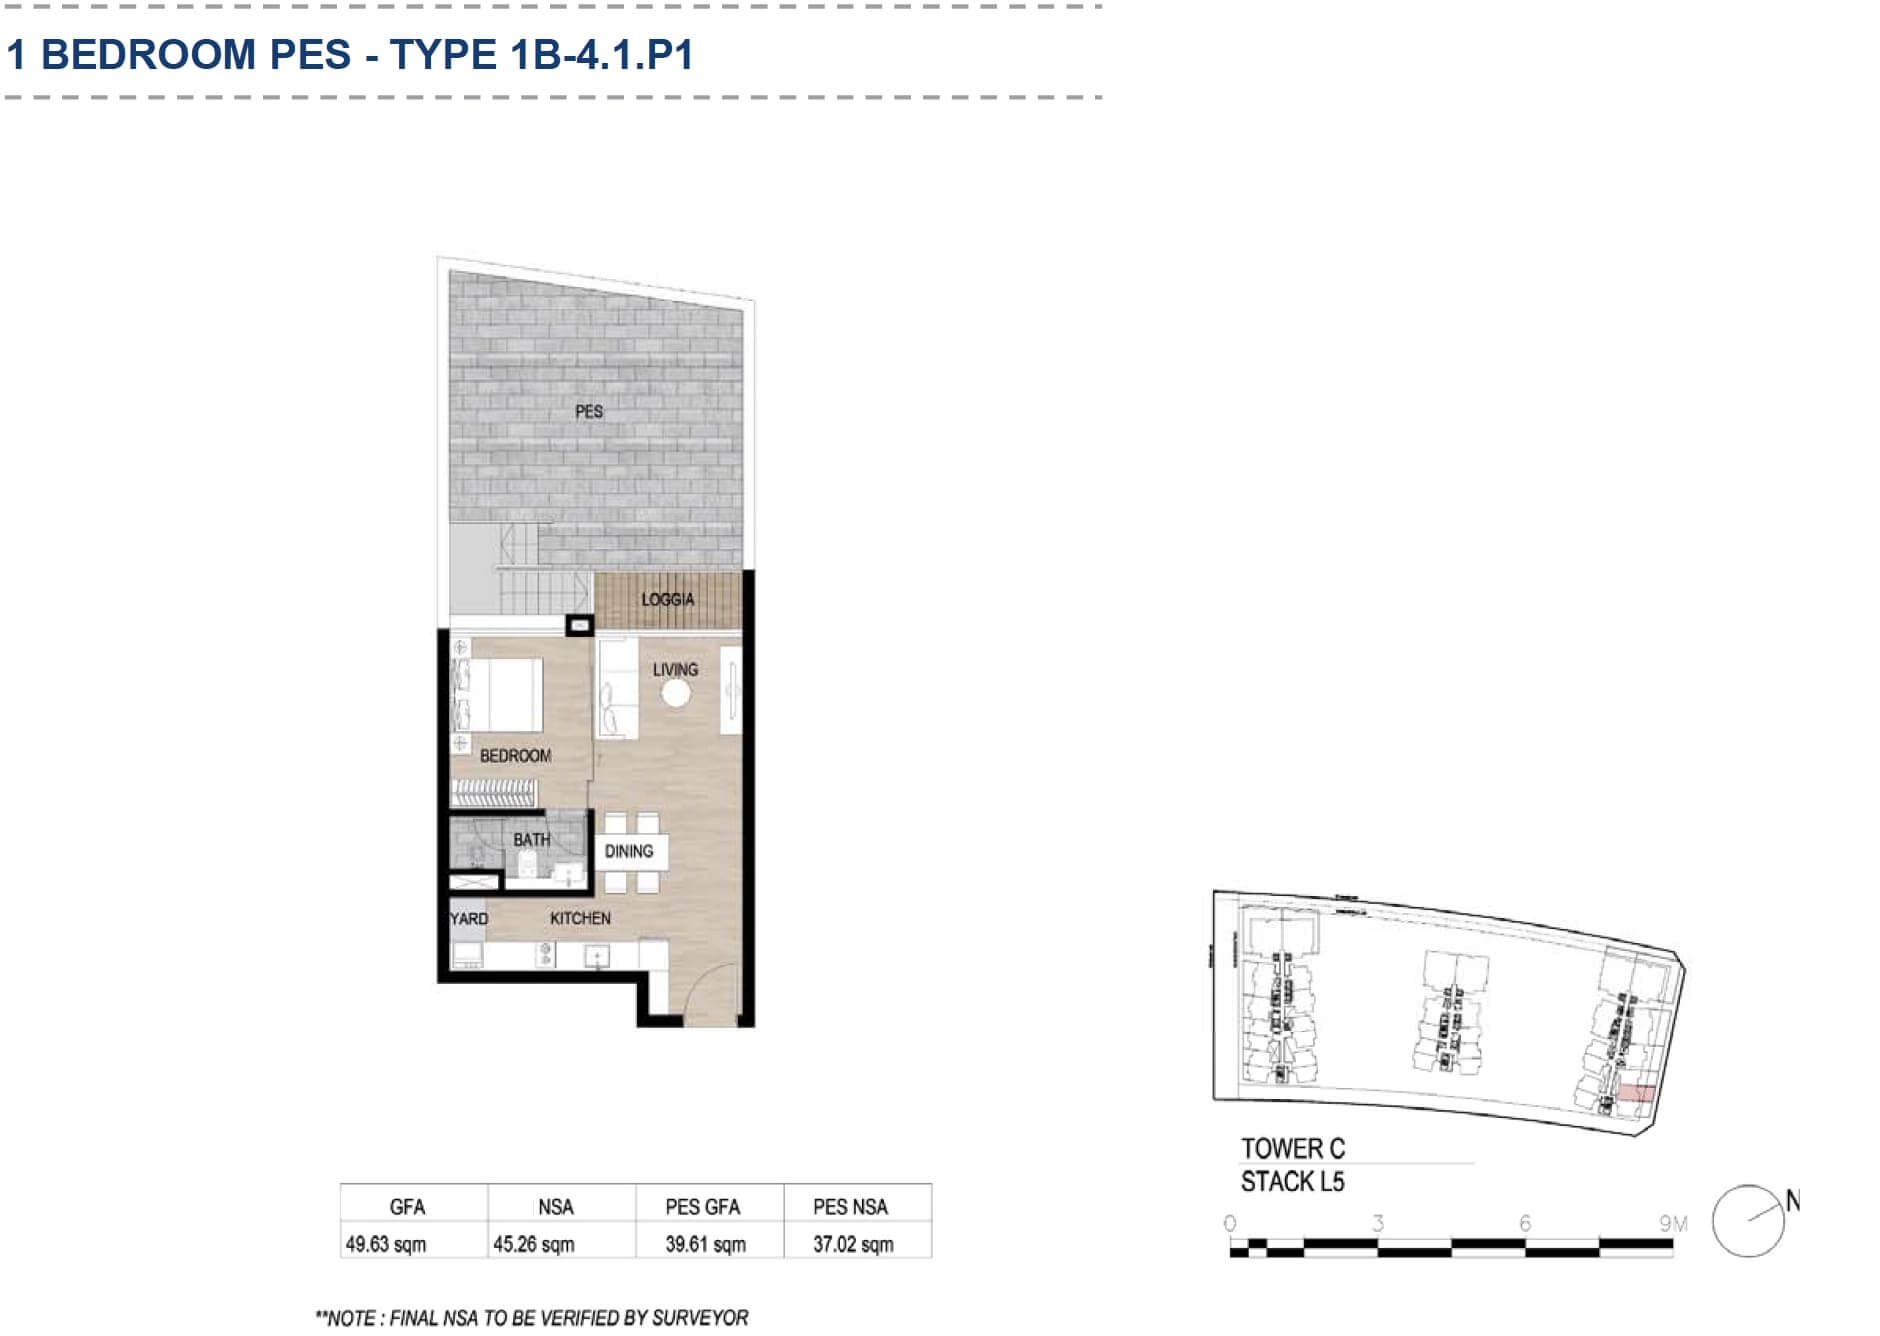 Floor plan of Metropole Thu Thiem garden apartment in District 2